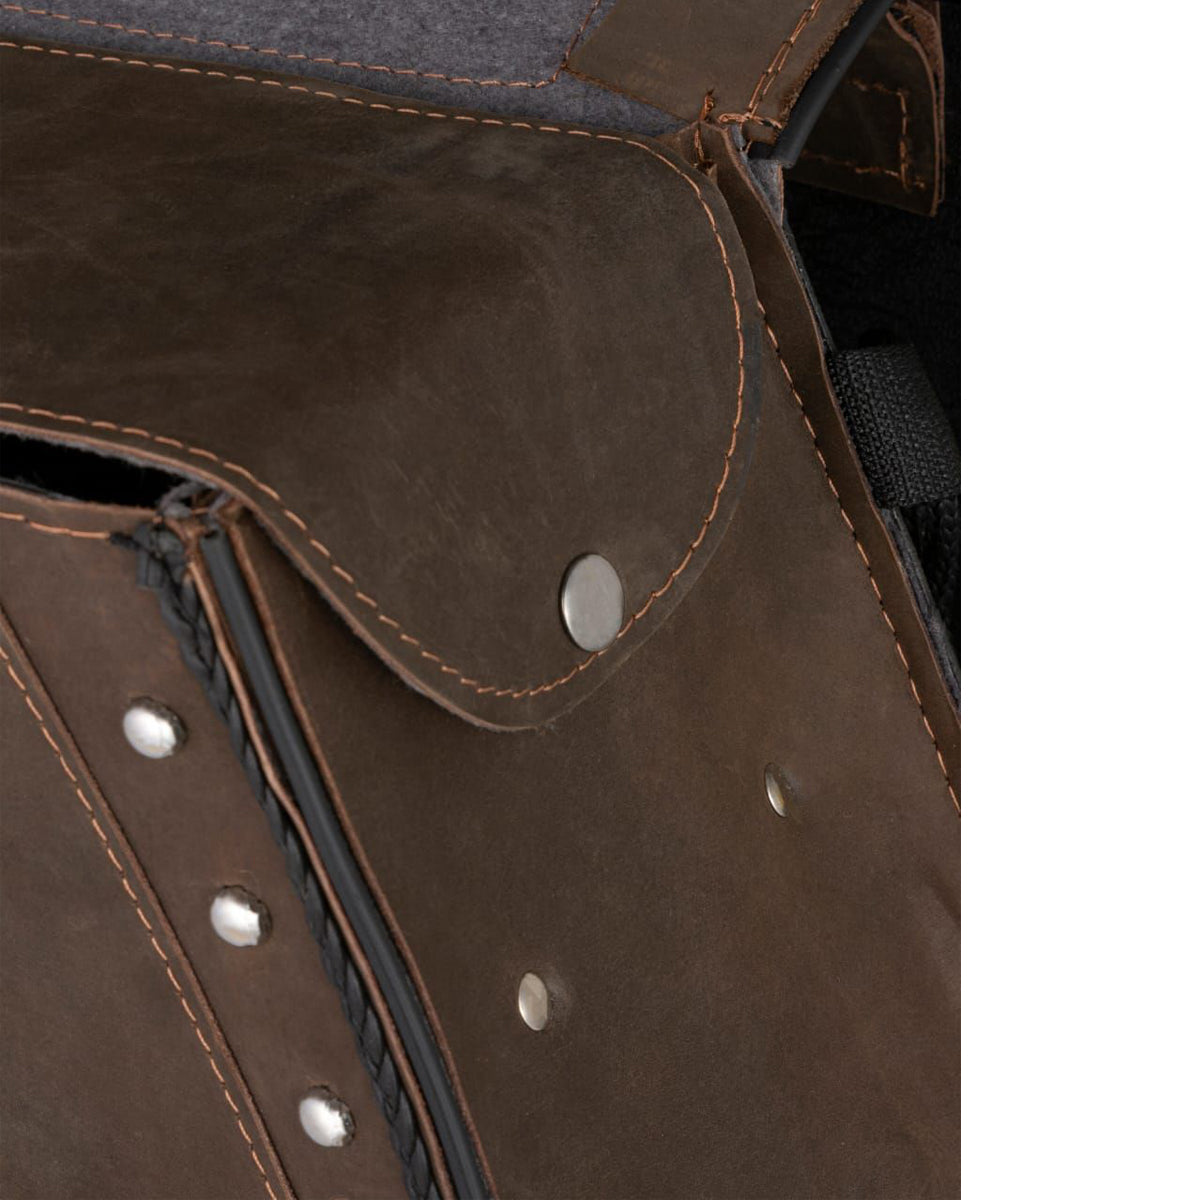 Genuine Vintage Brown Naked Leather Concealed Carry Saddlebag with Braid